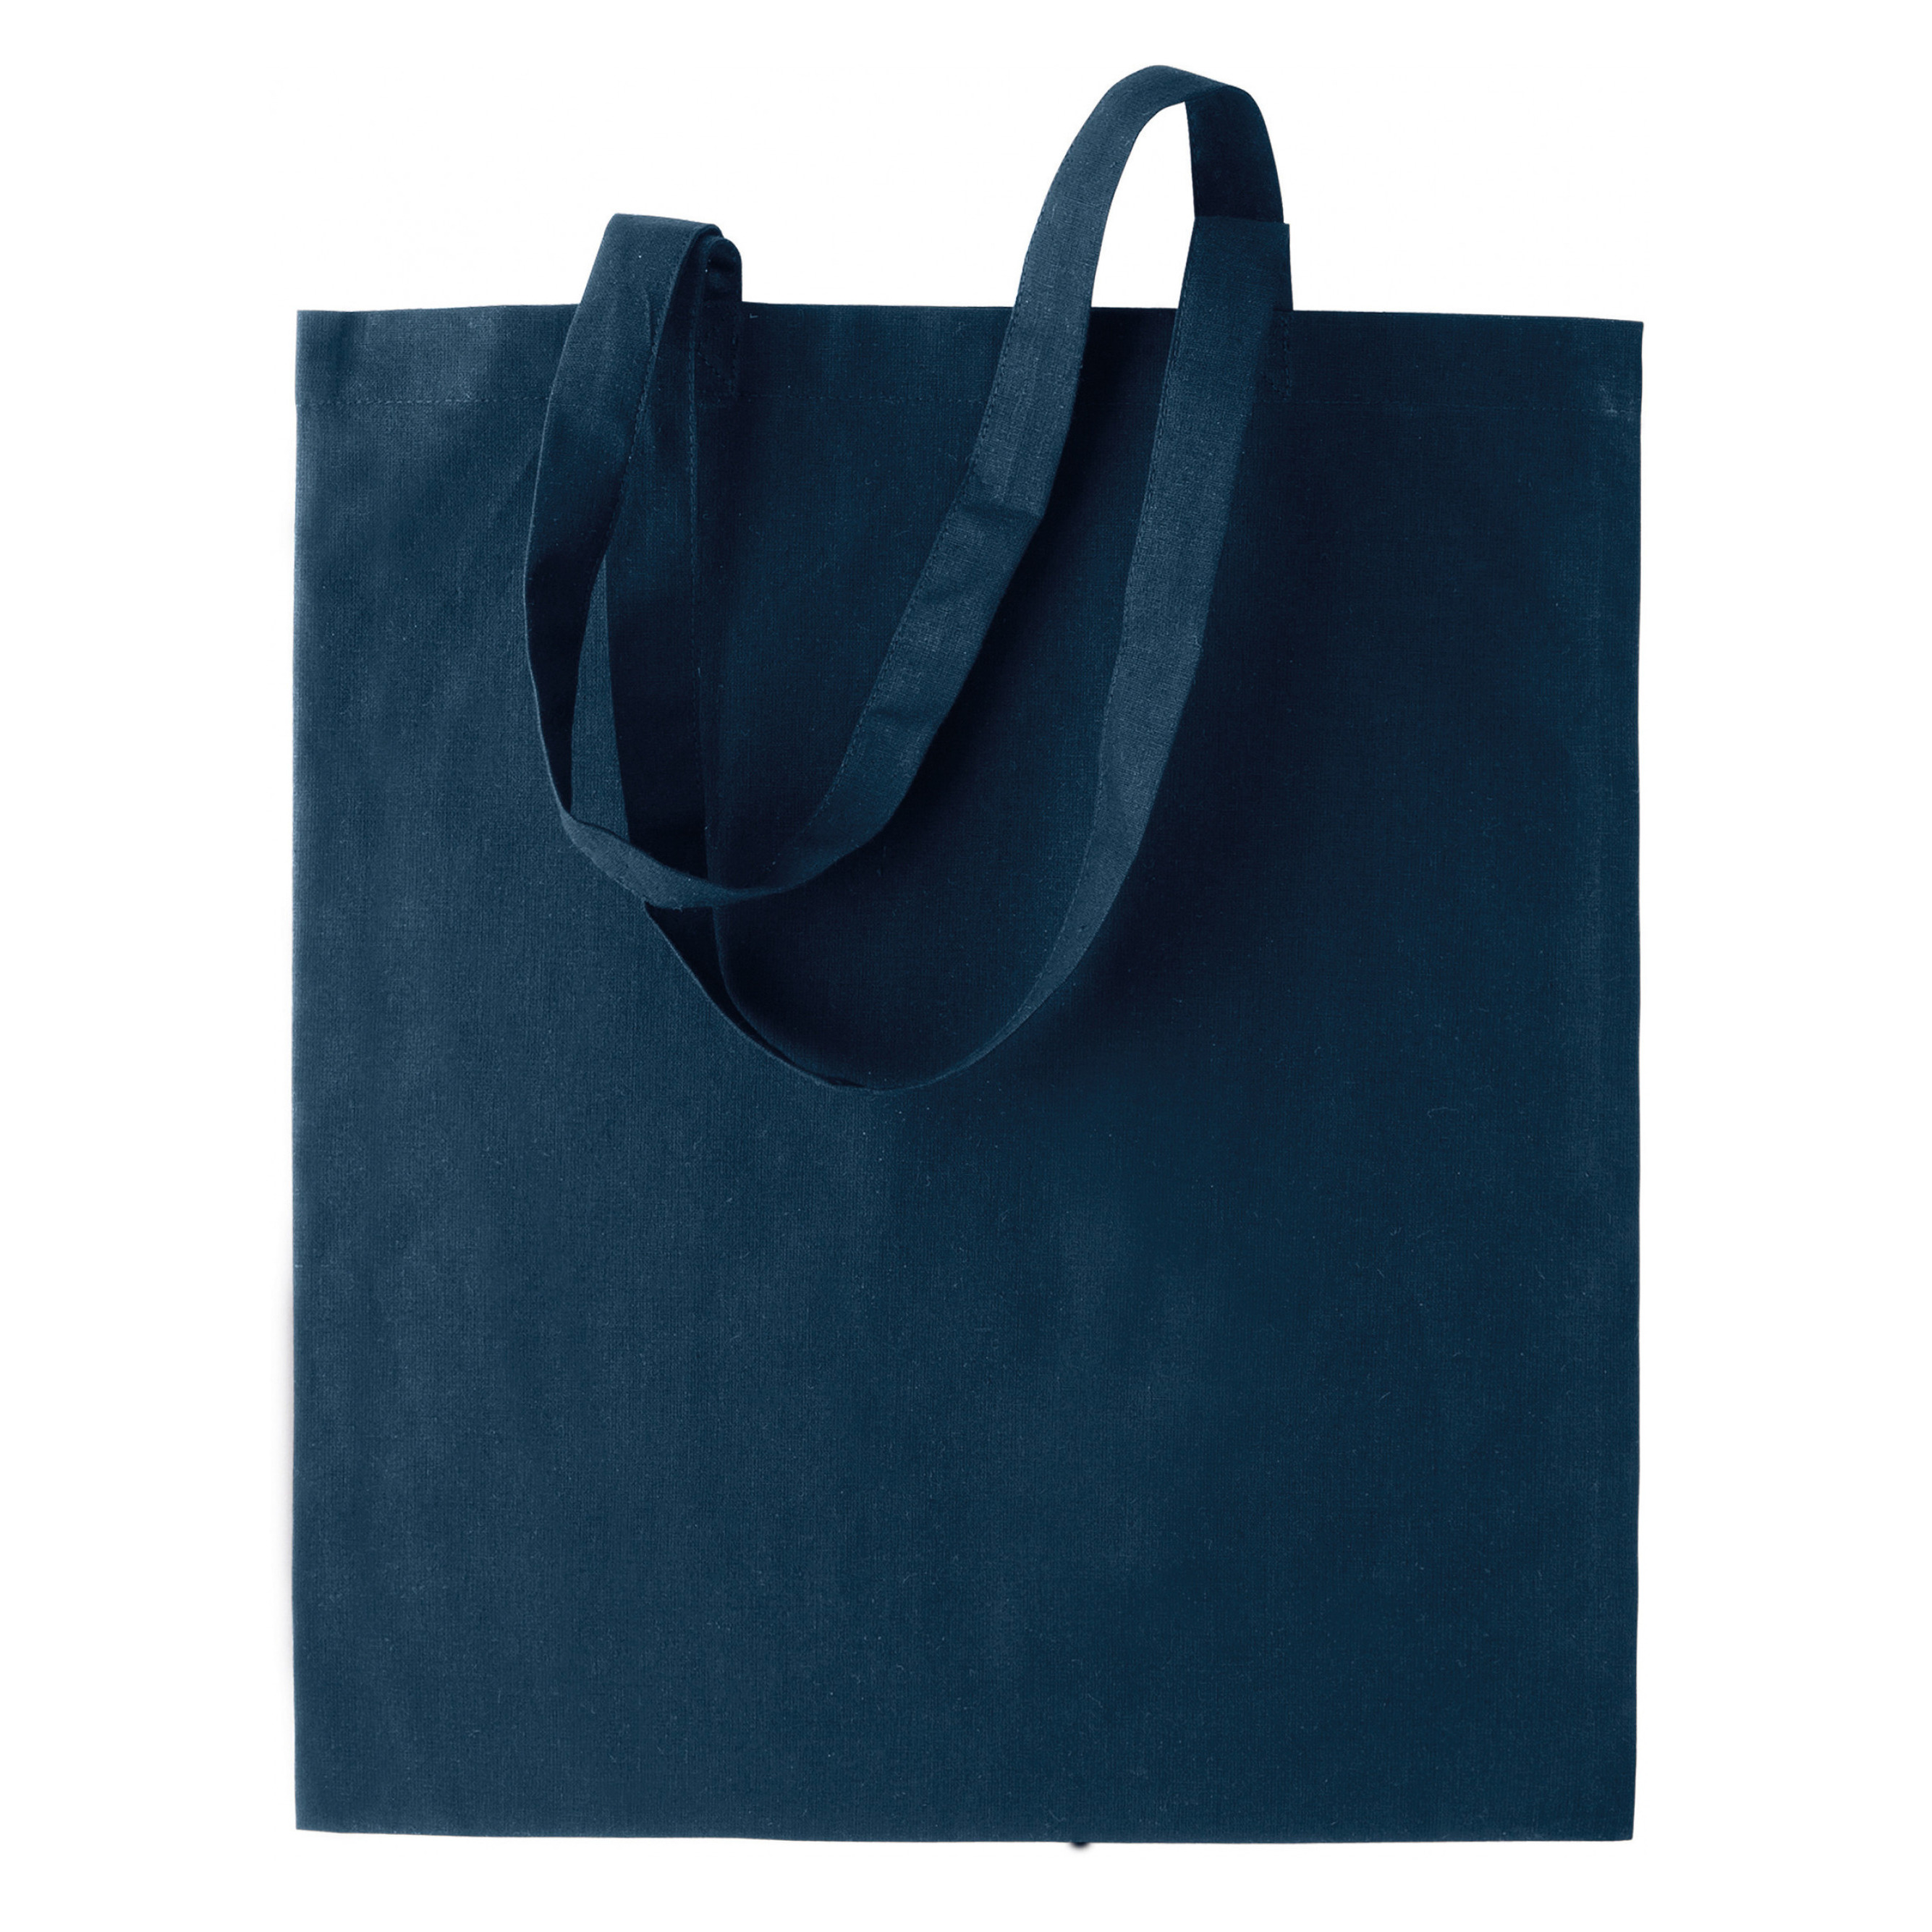 Basic katoenen schoudertasje in het donkerblauw 38 x 42 cm